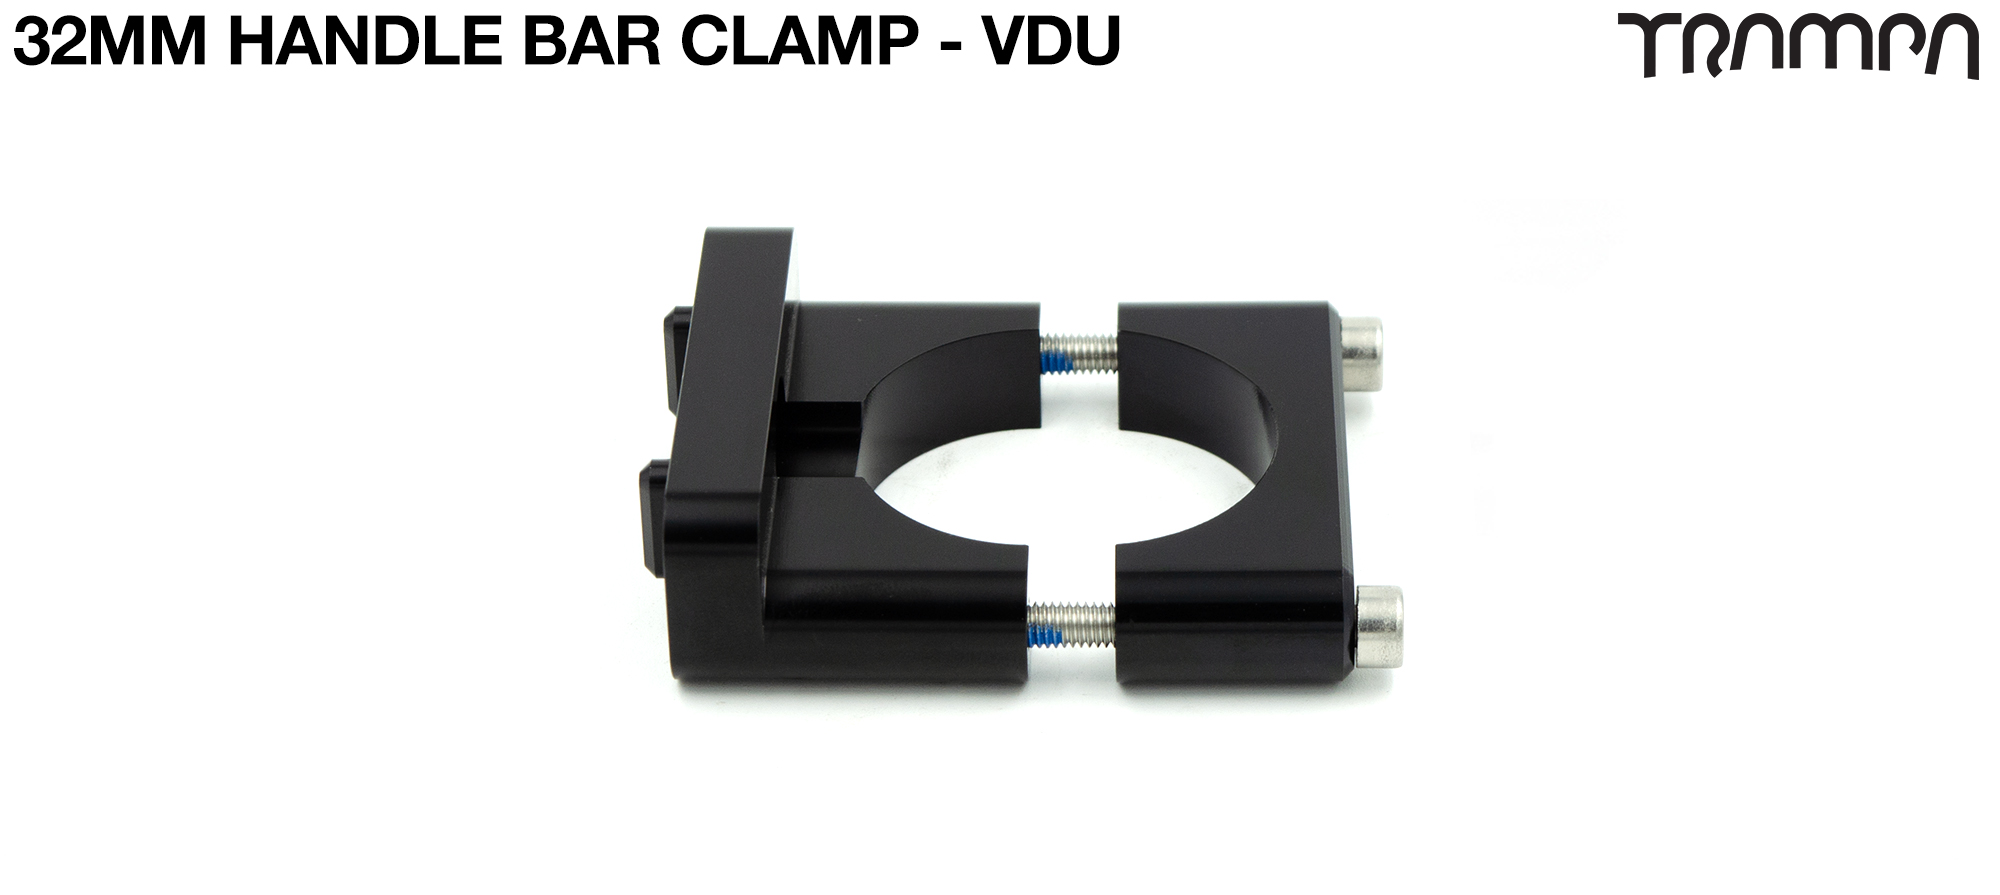 32mm Handle Bar Clamp to mount the VESC DISPLAY UNIT - VDU Display 